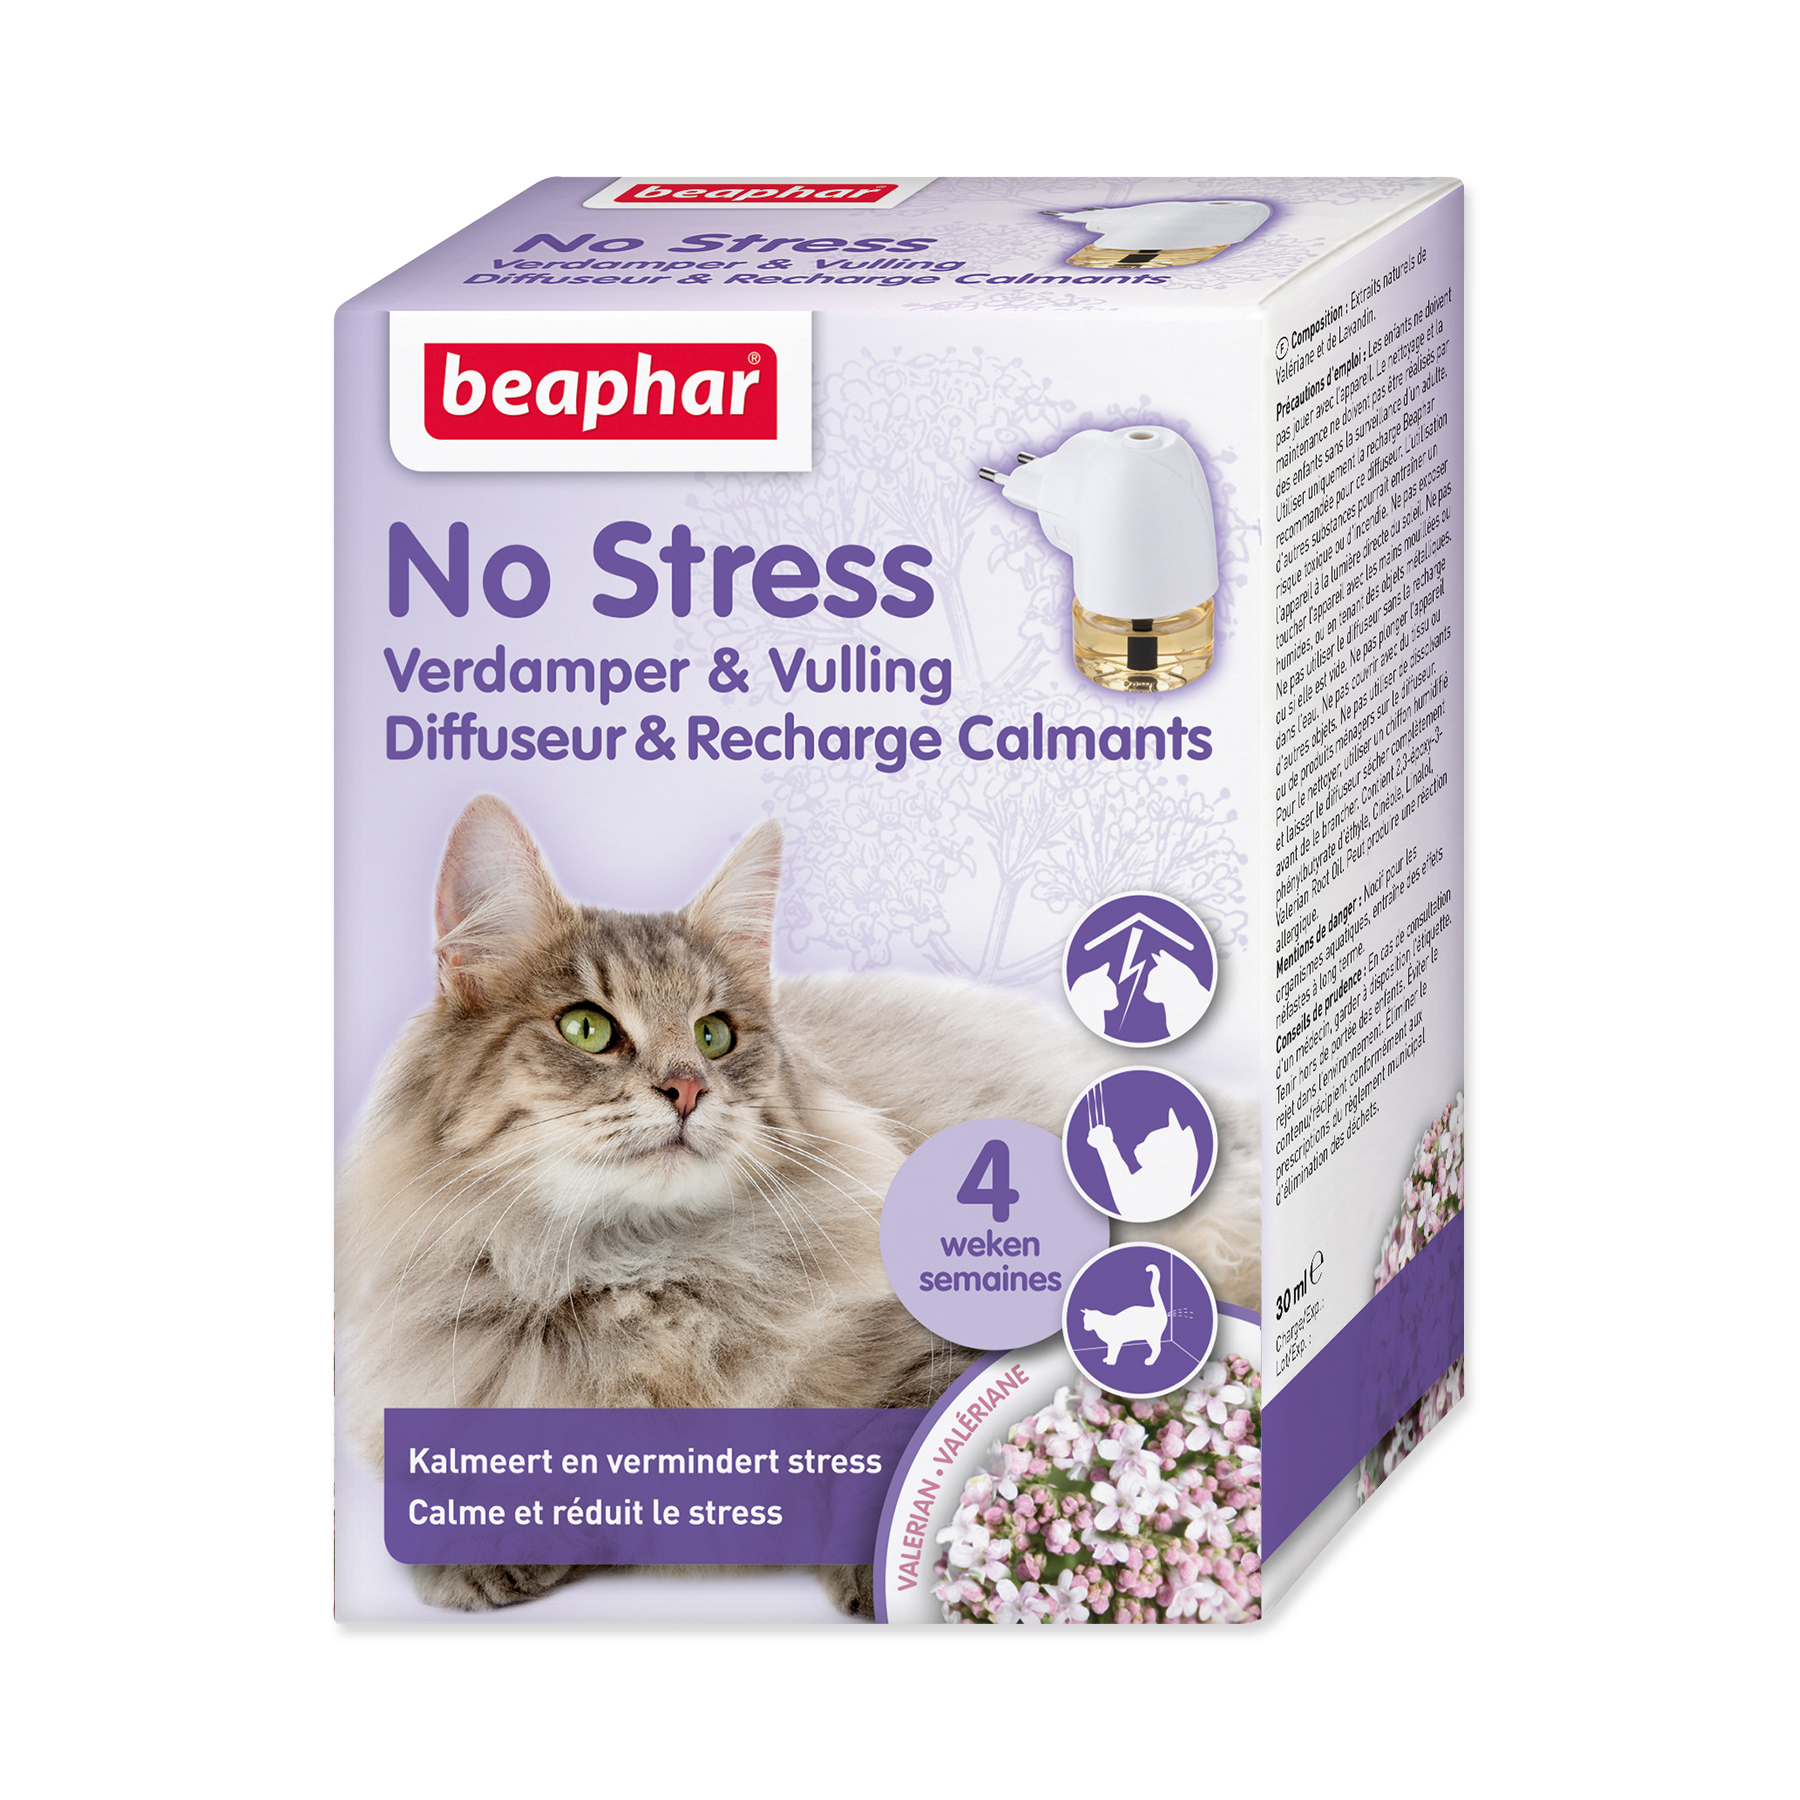 Beaphar No Stress pro kočky sada s difuzérem 30 ml Beaphar